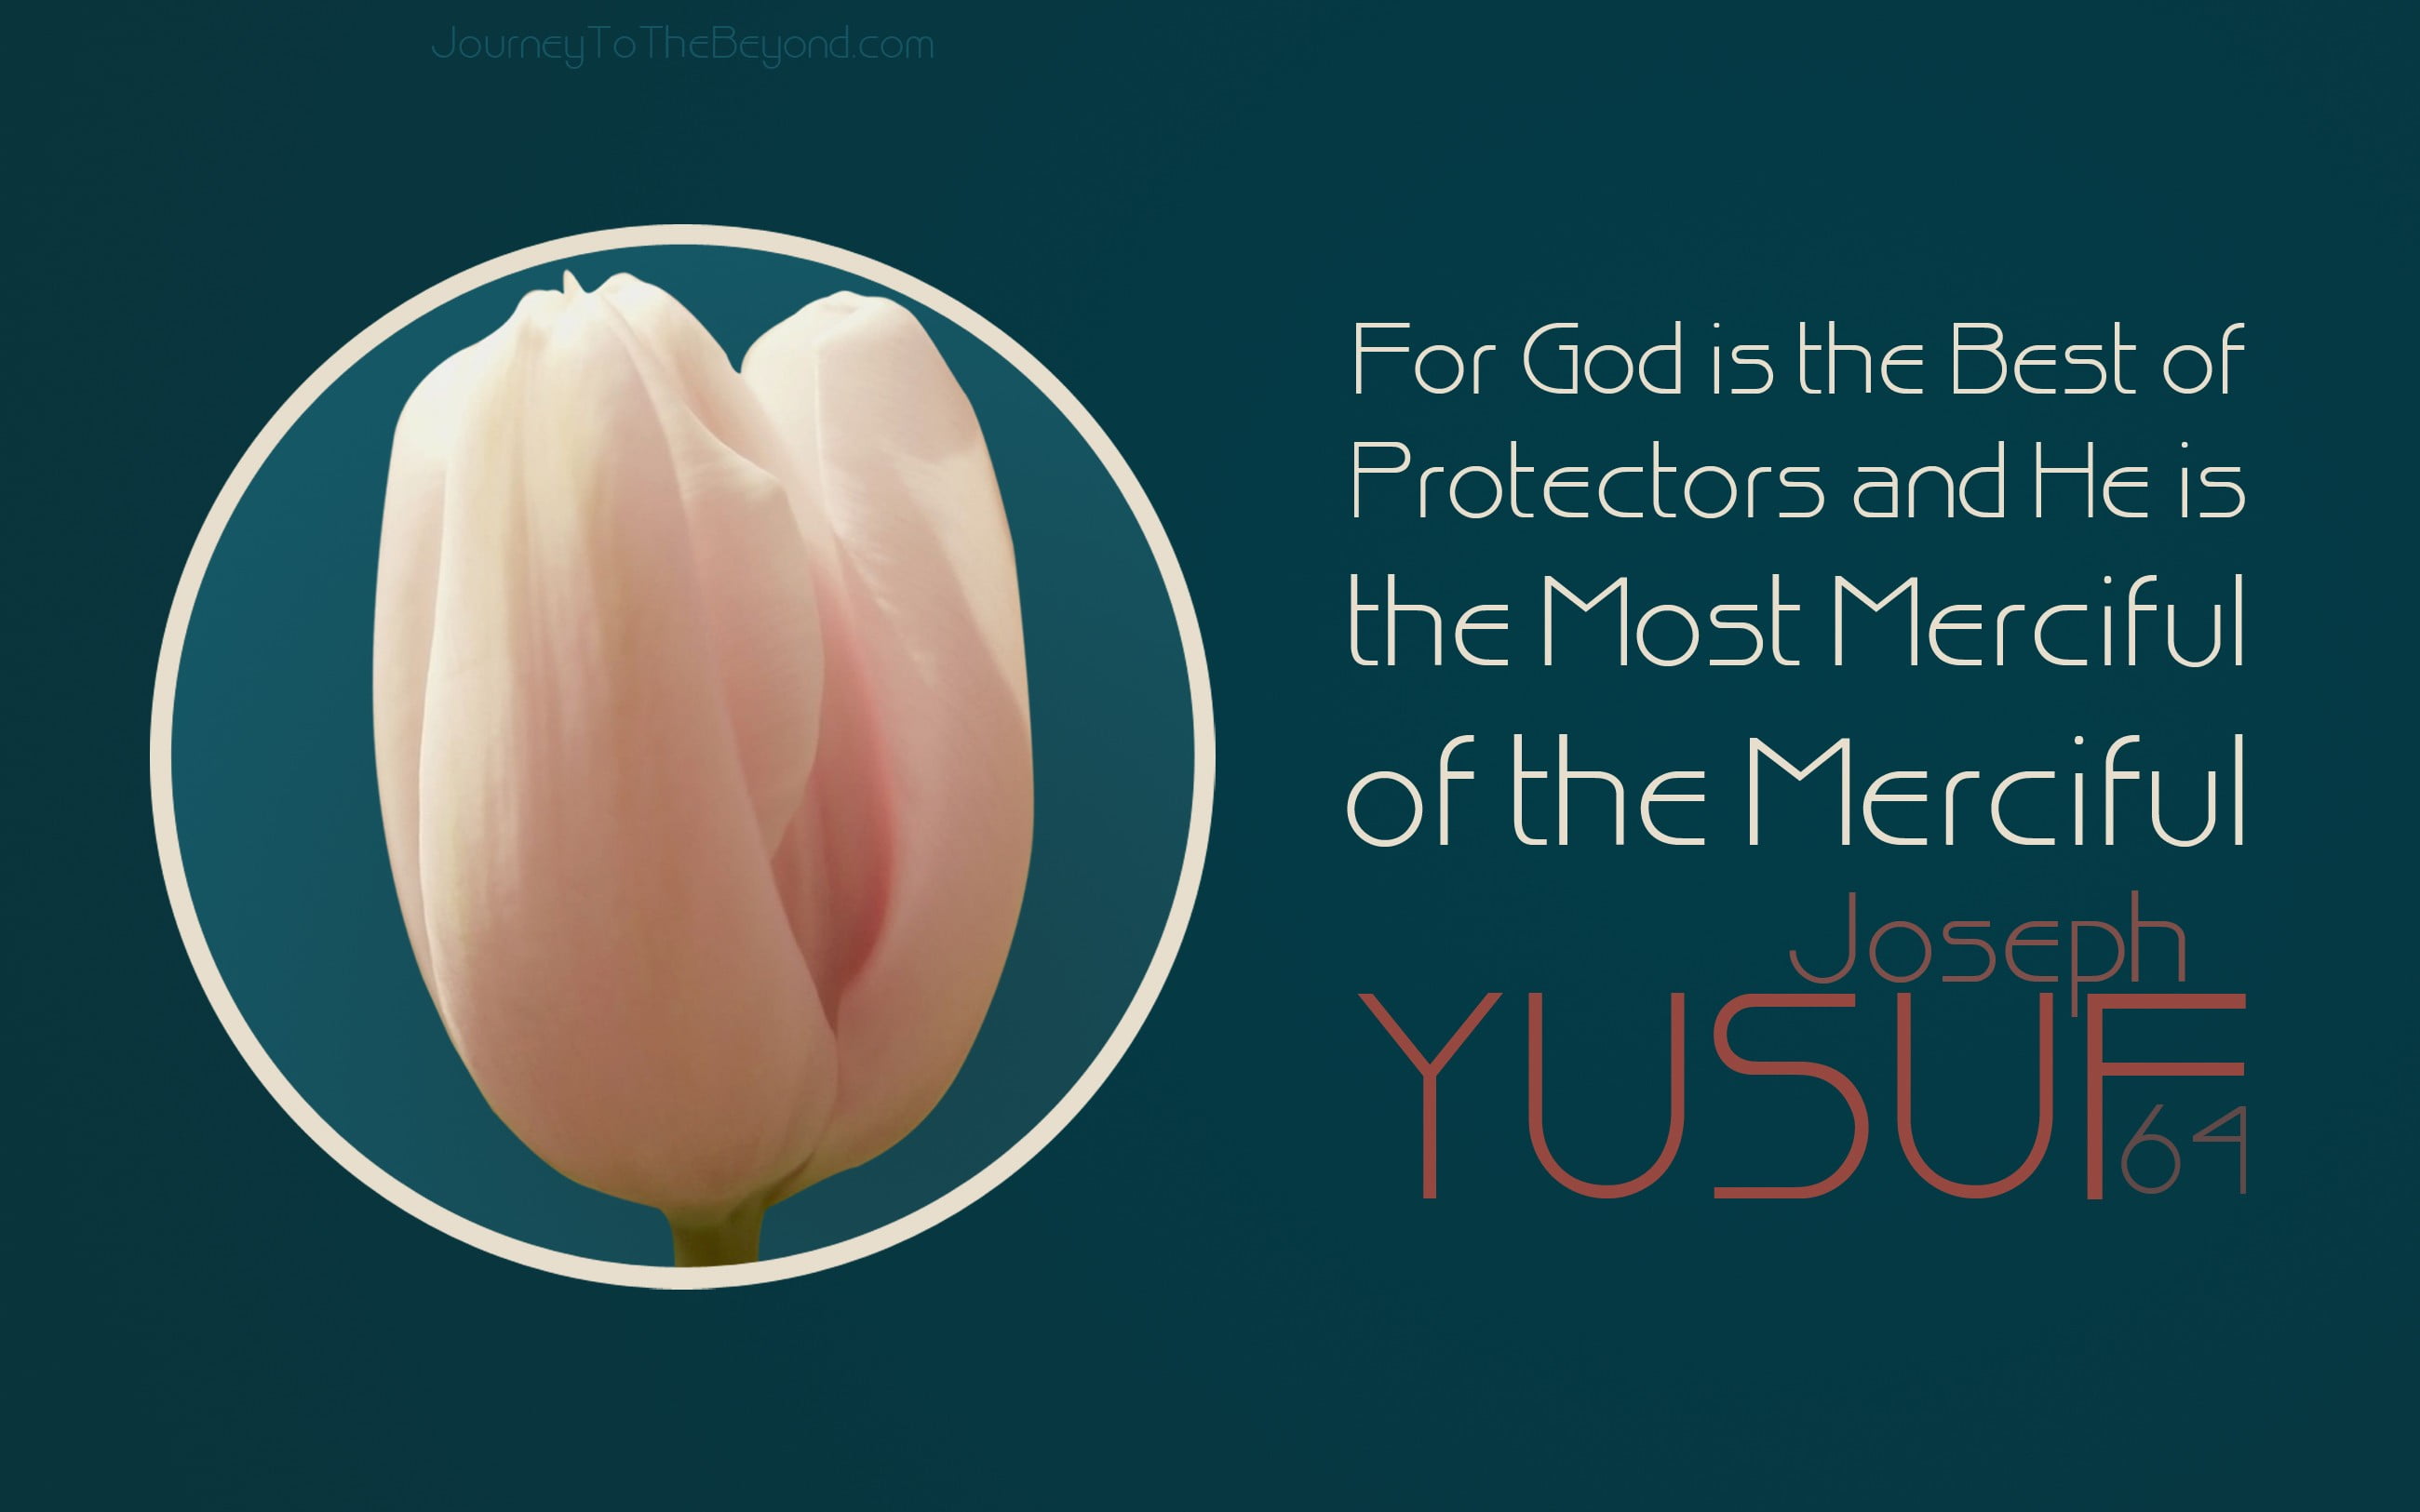 Yusuf quoted artwork, prophet, joseph, Qur'an, God, Islam, religion